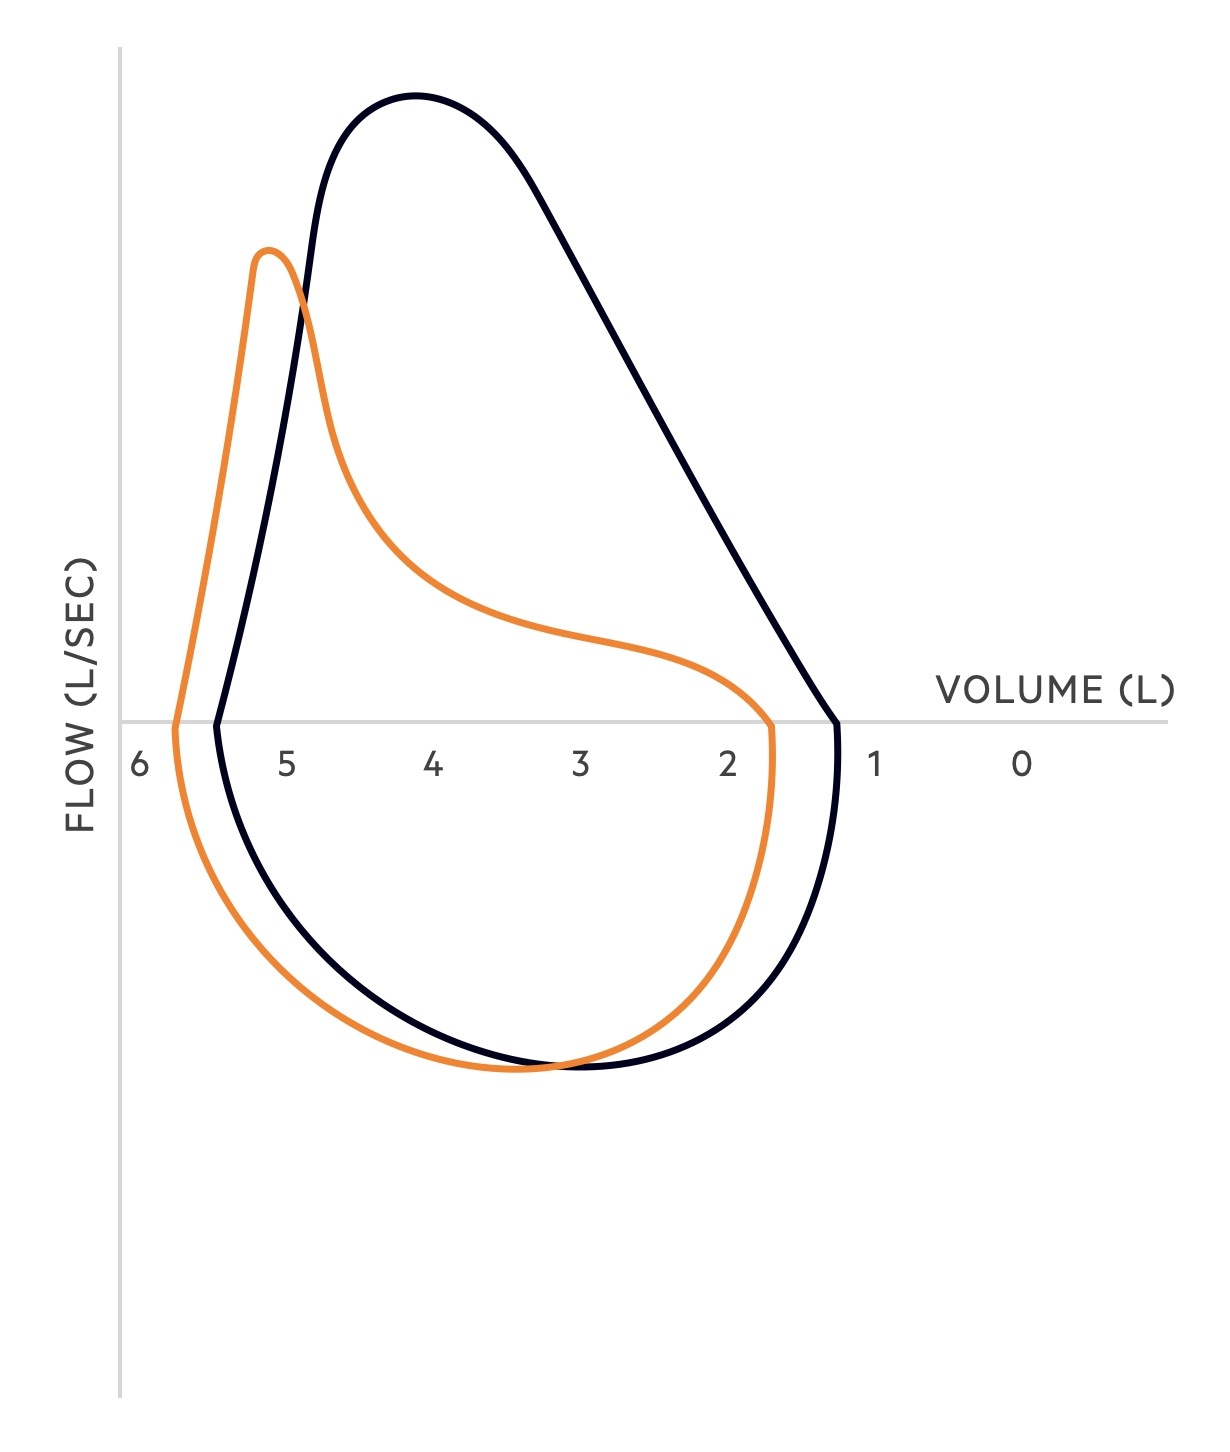 Obstructive flow-volume loop